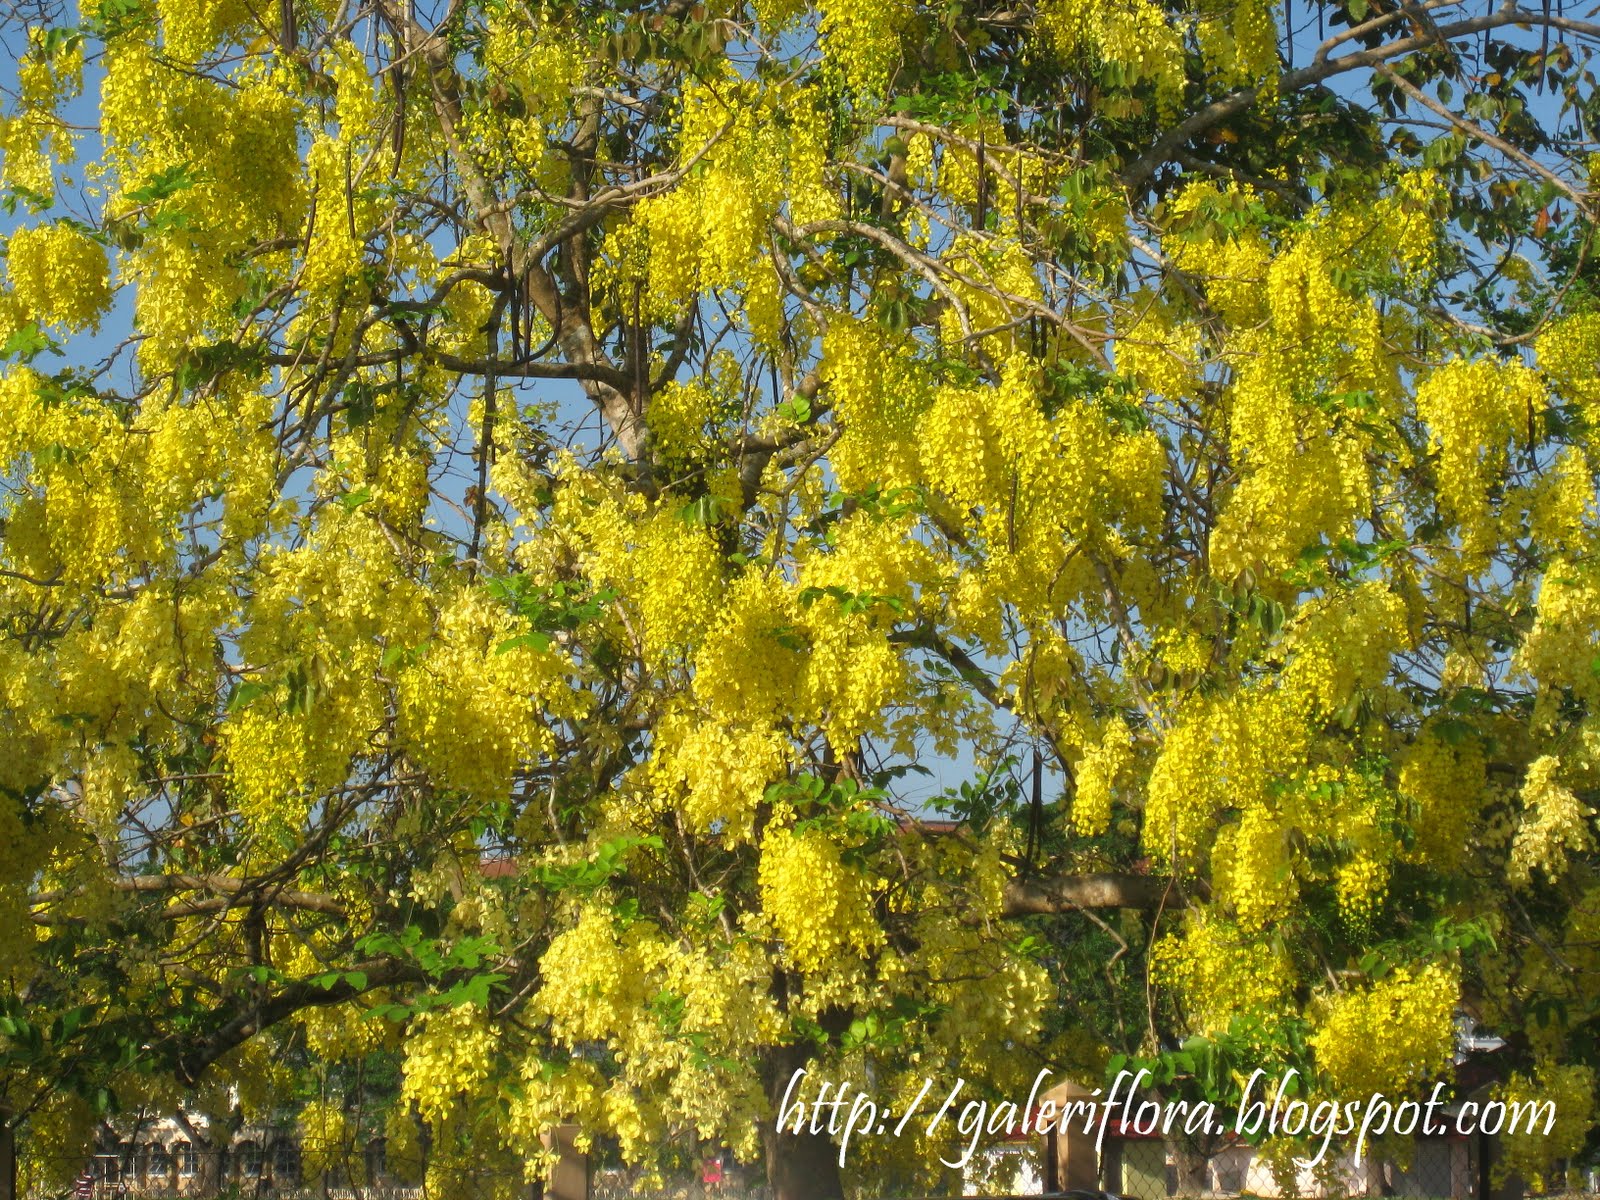 Galeri flora: Cassia fistula (Golden Shower Tree)